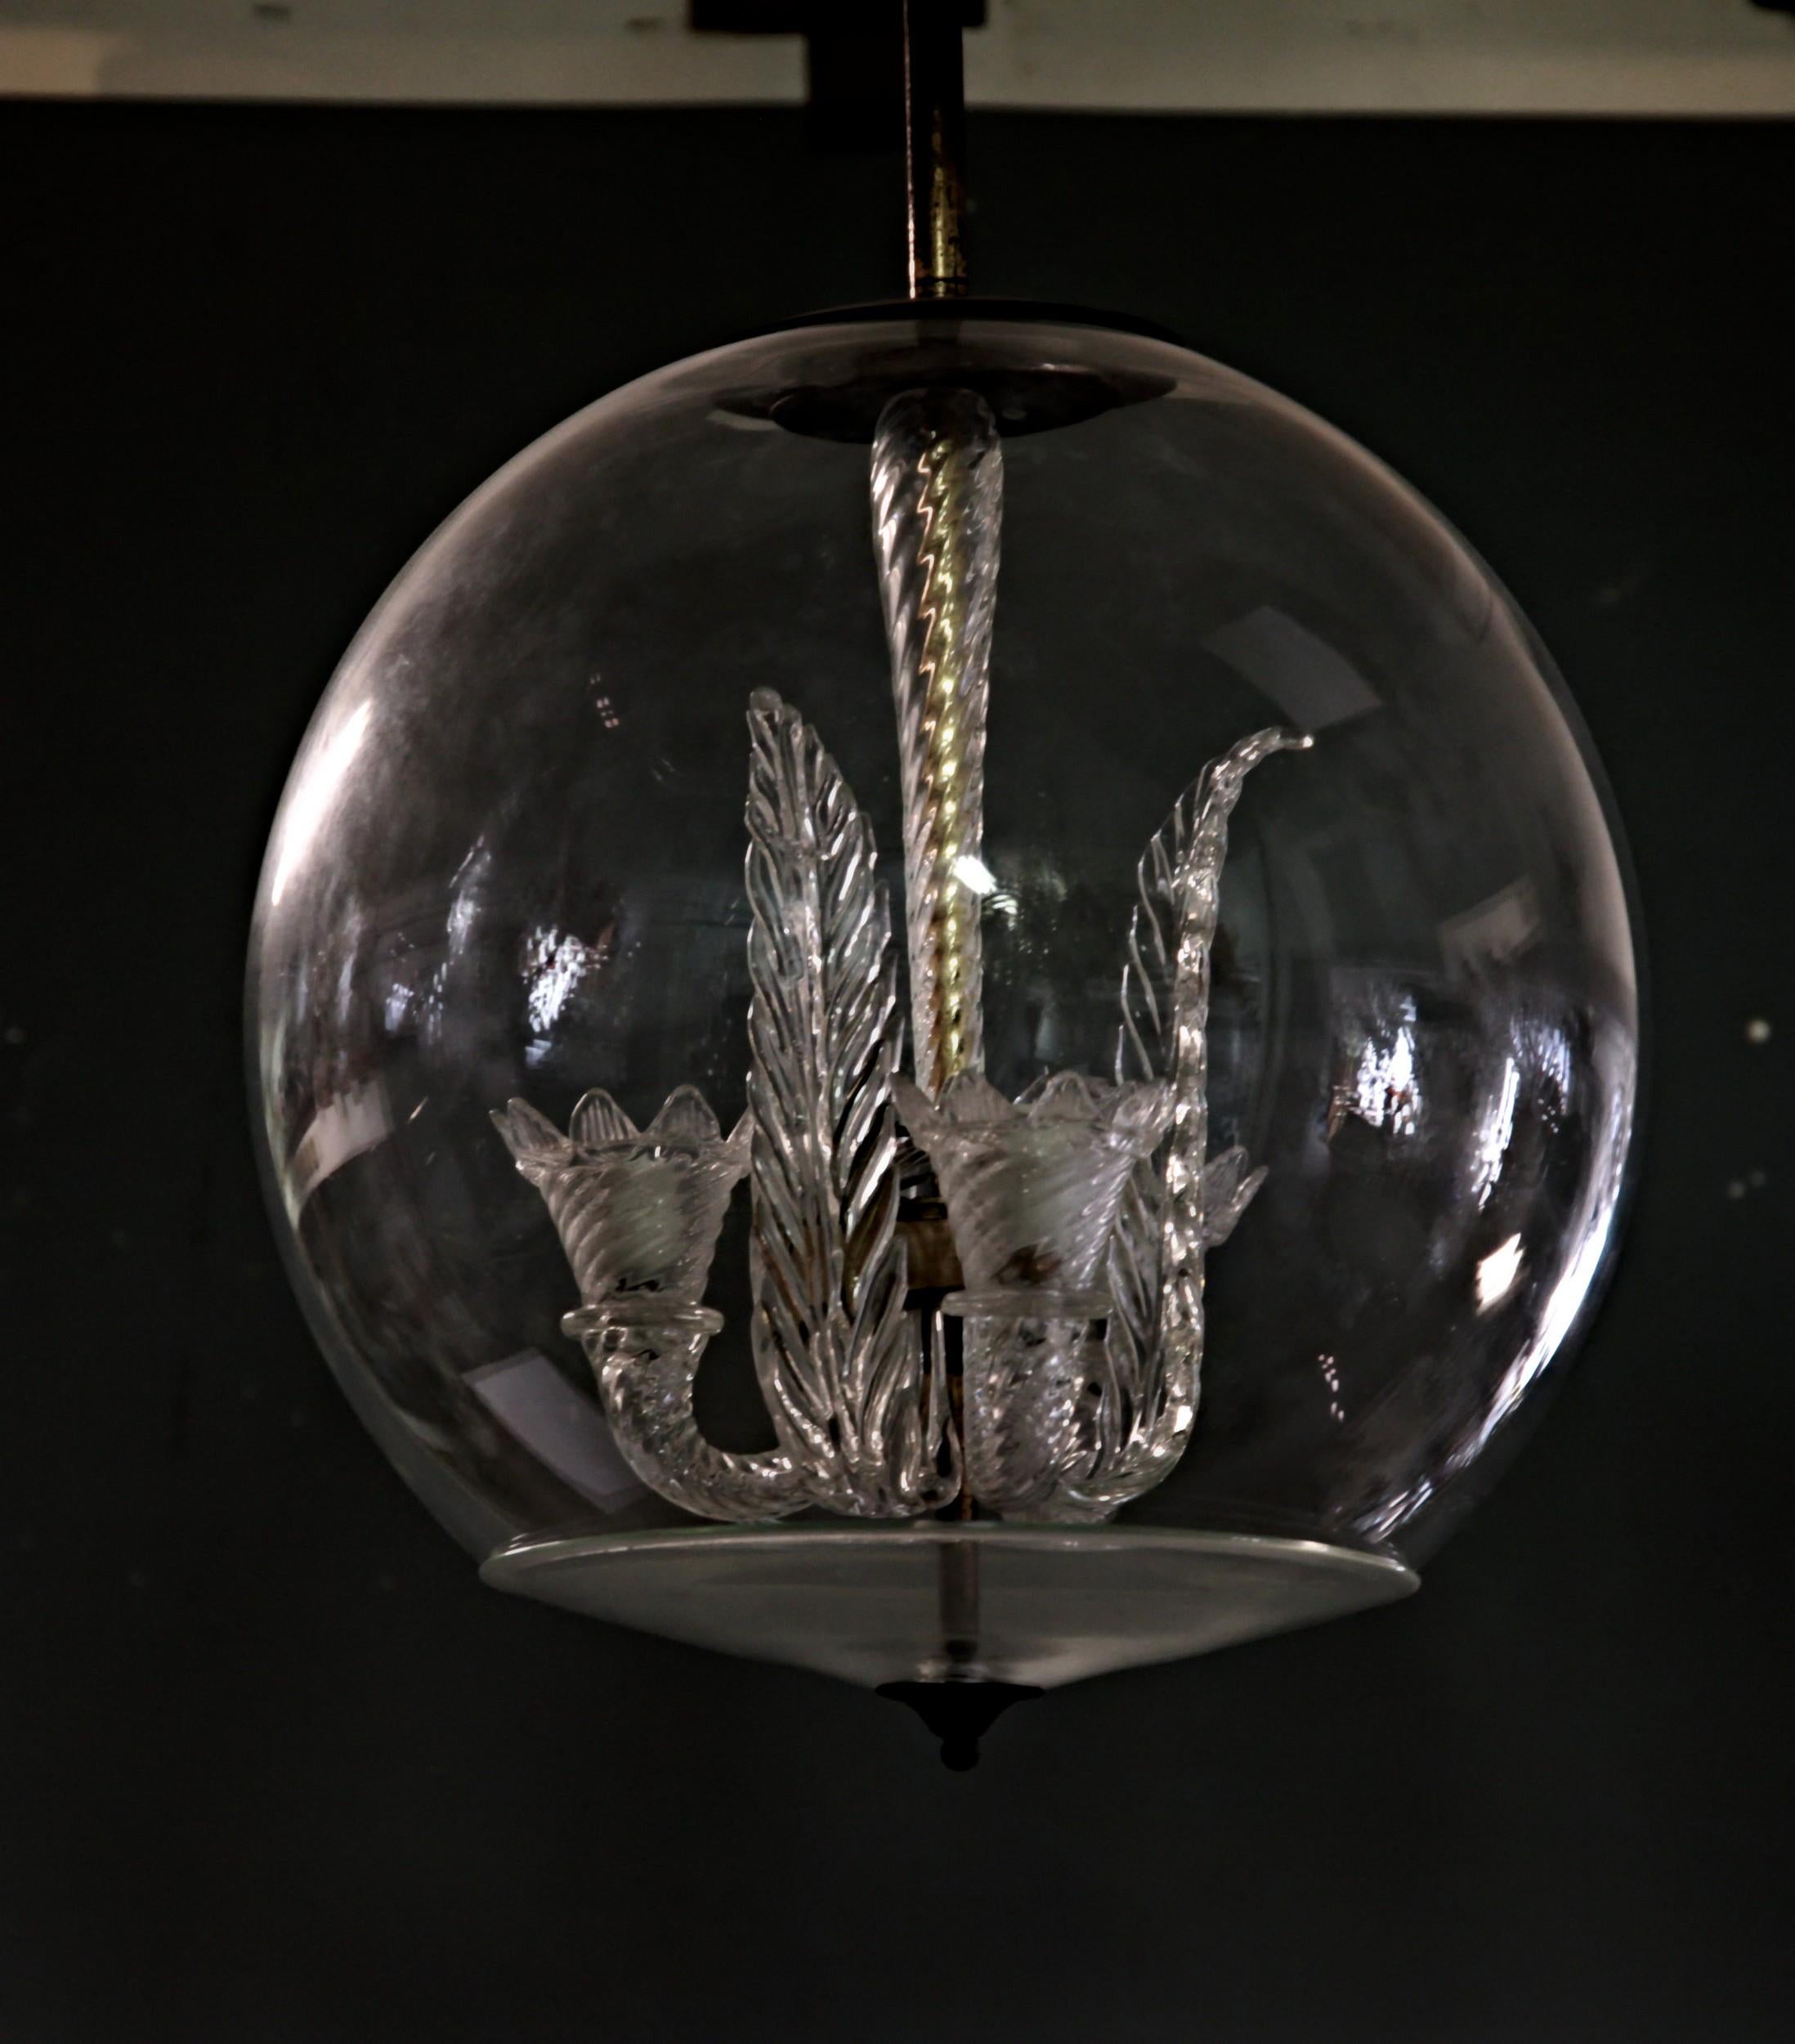 Mid-Century Modern Tommaso Buzzi for Venini, Three Arms Chandelier Inside a Glass Sphere, 1930s